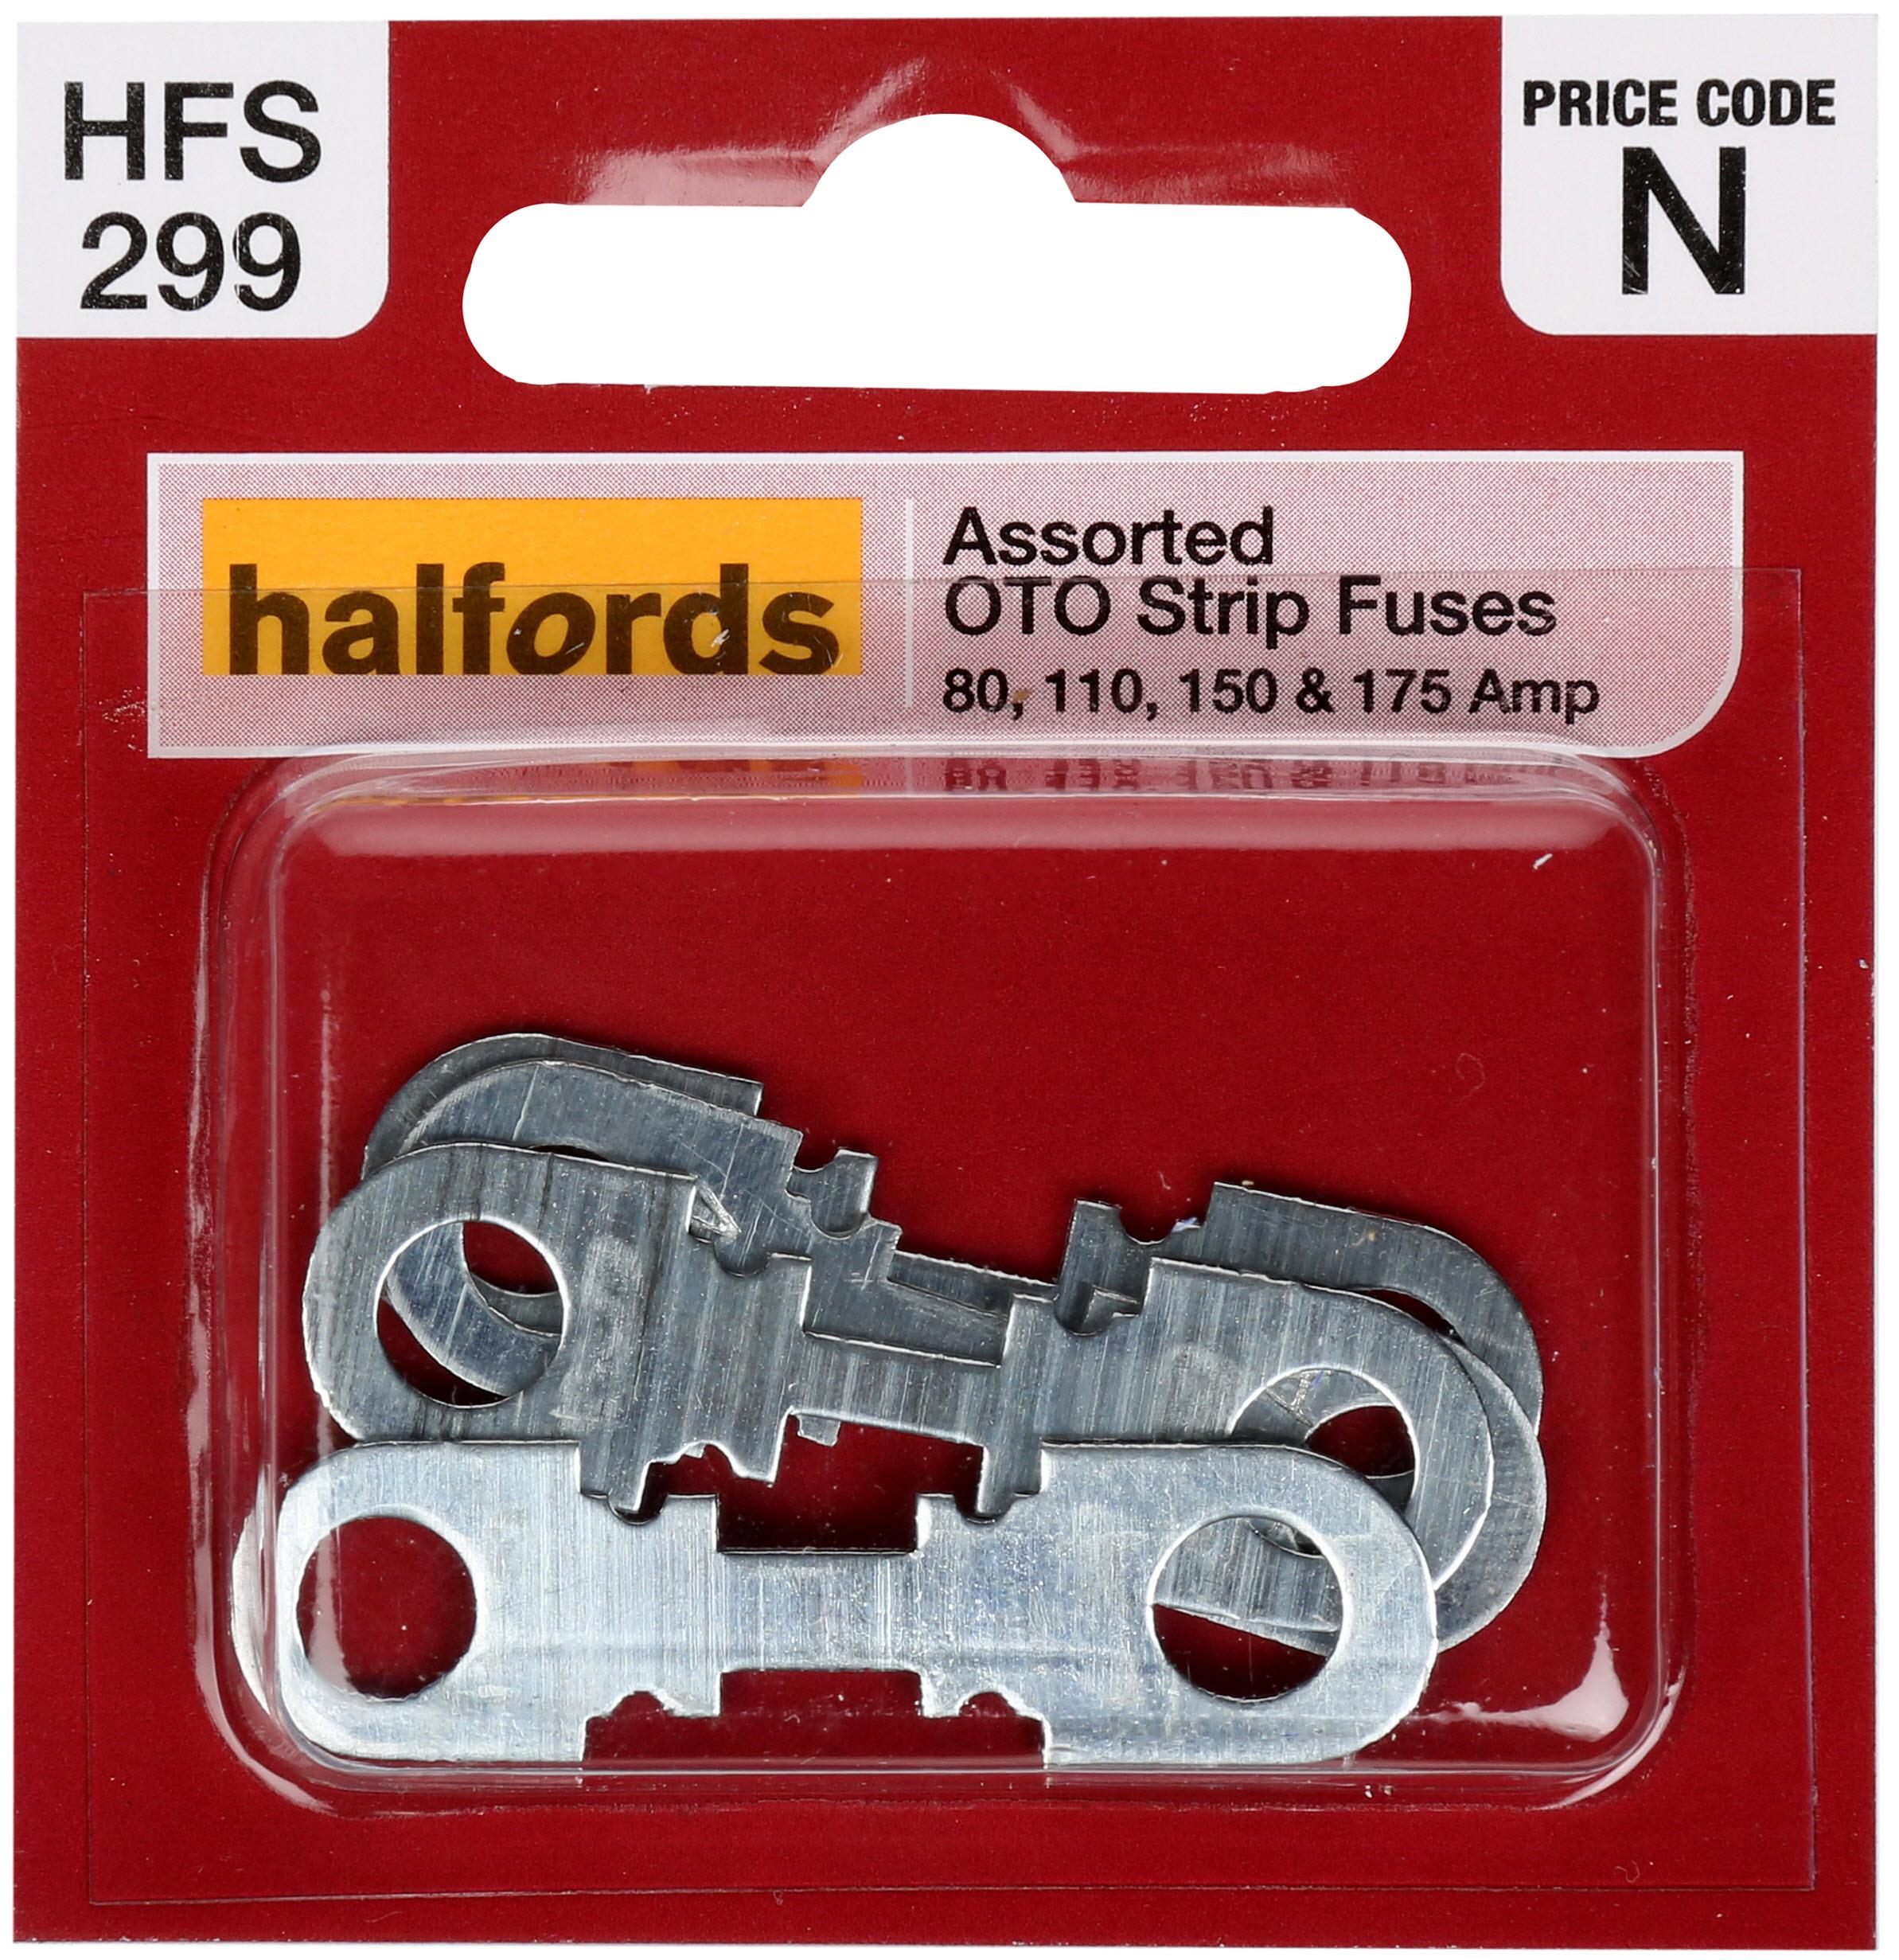 Halfords Assorted Oto Strip Fuses 80, 110, 150 & 175 Amp